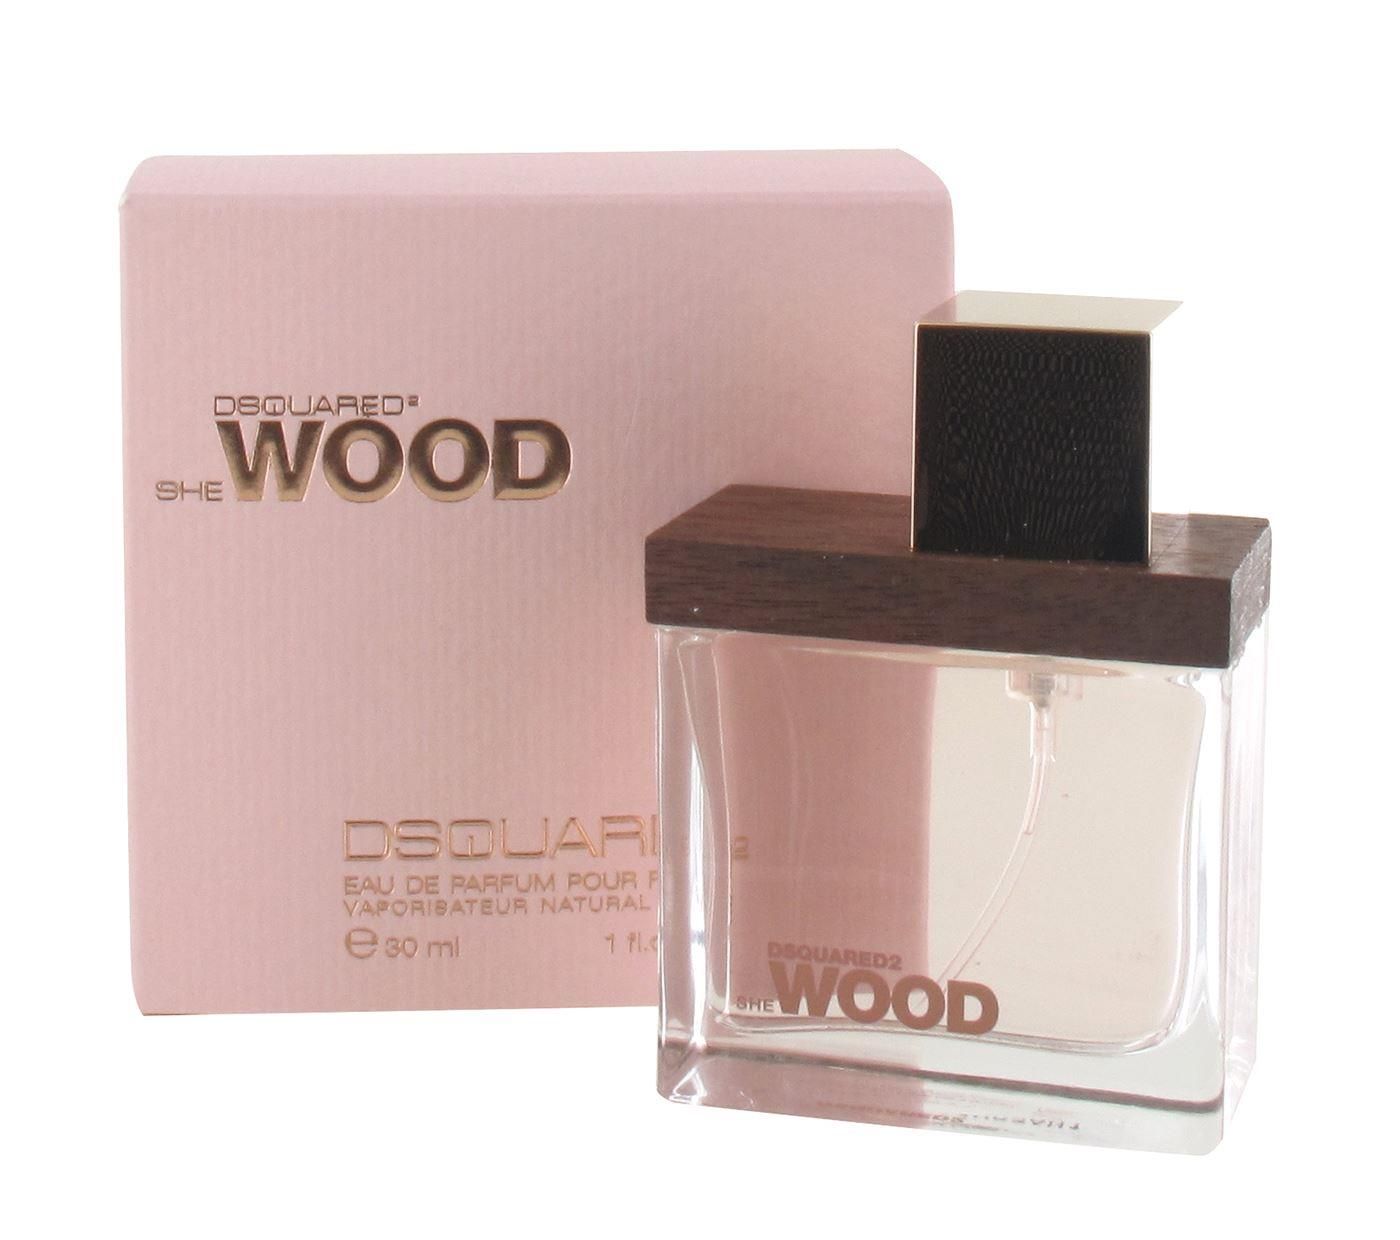 parfum dsquared2 wood